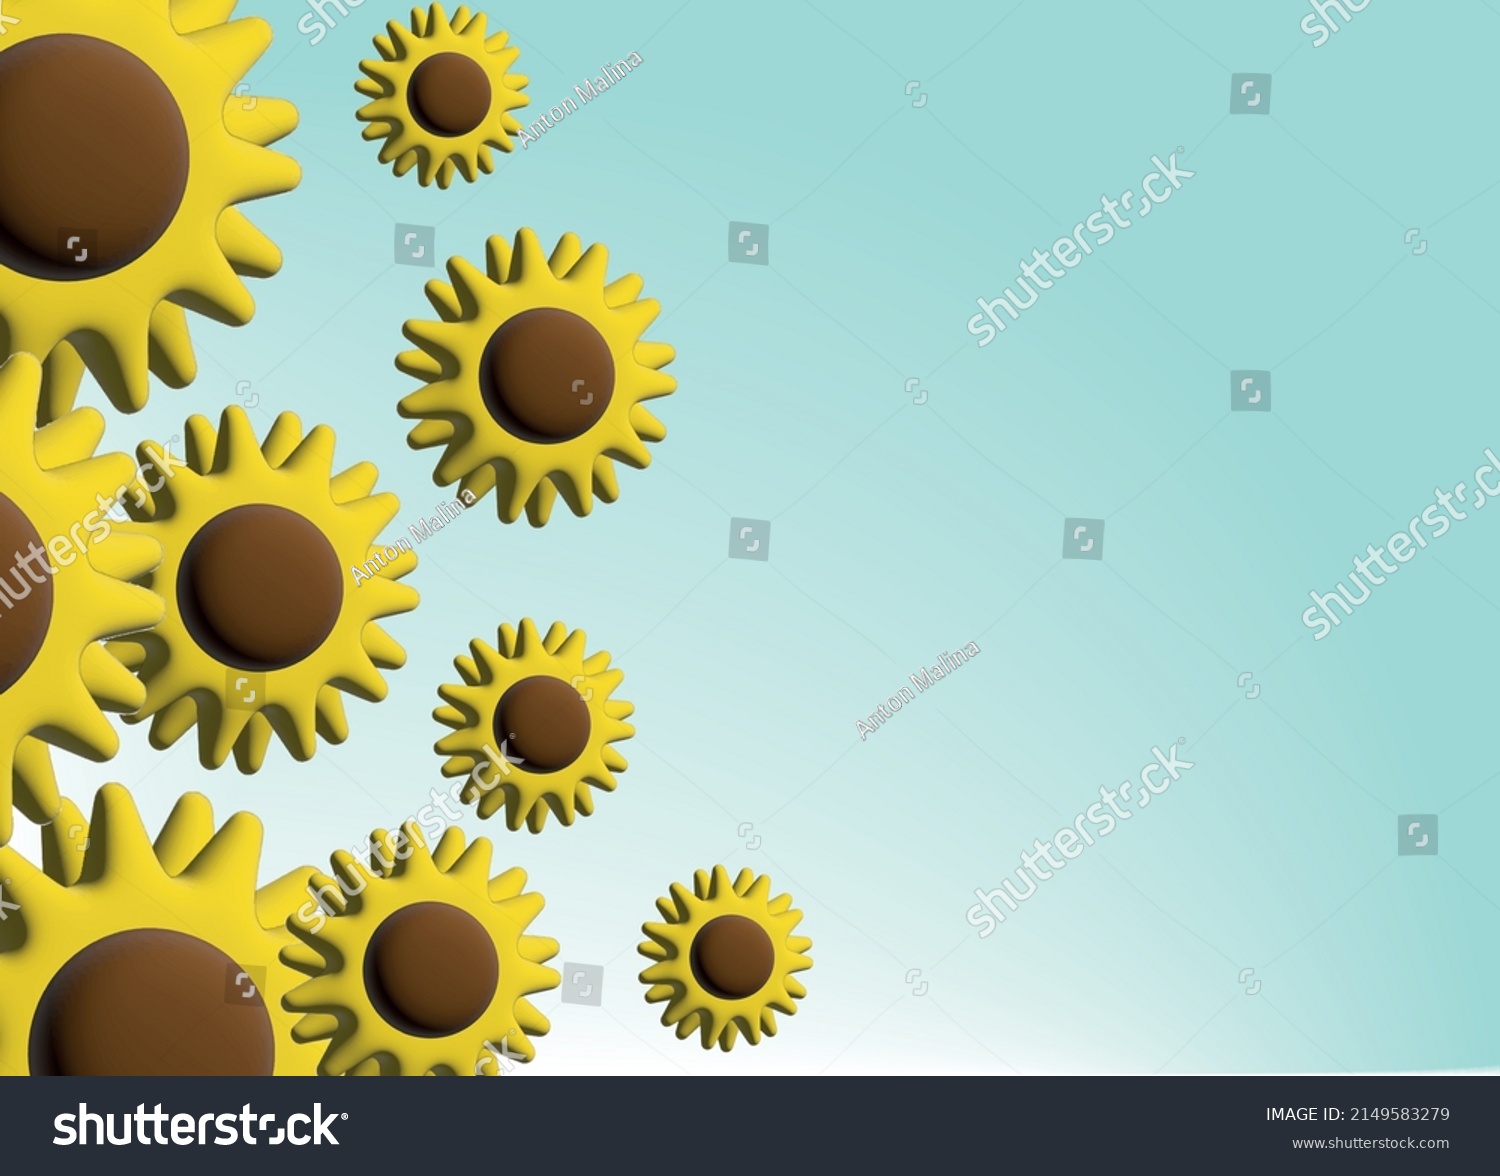 SVG of 3d sunflowers vector illustration. Summer flowers background. svg